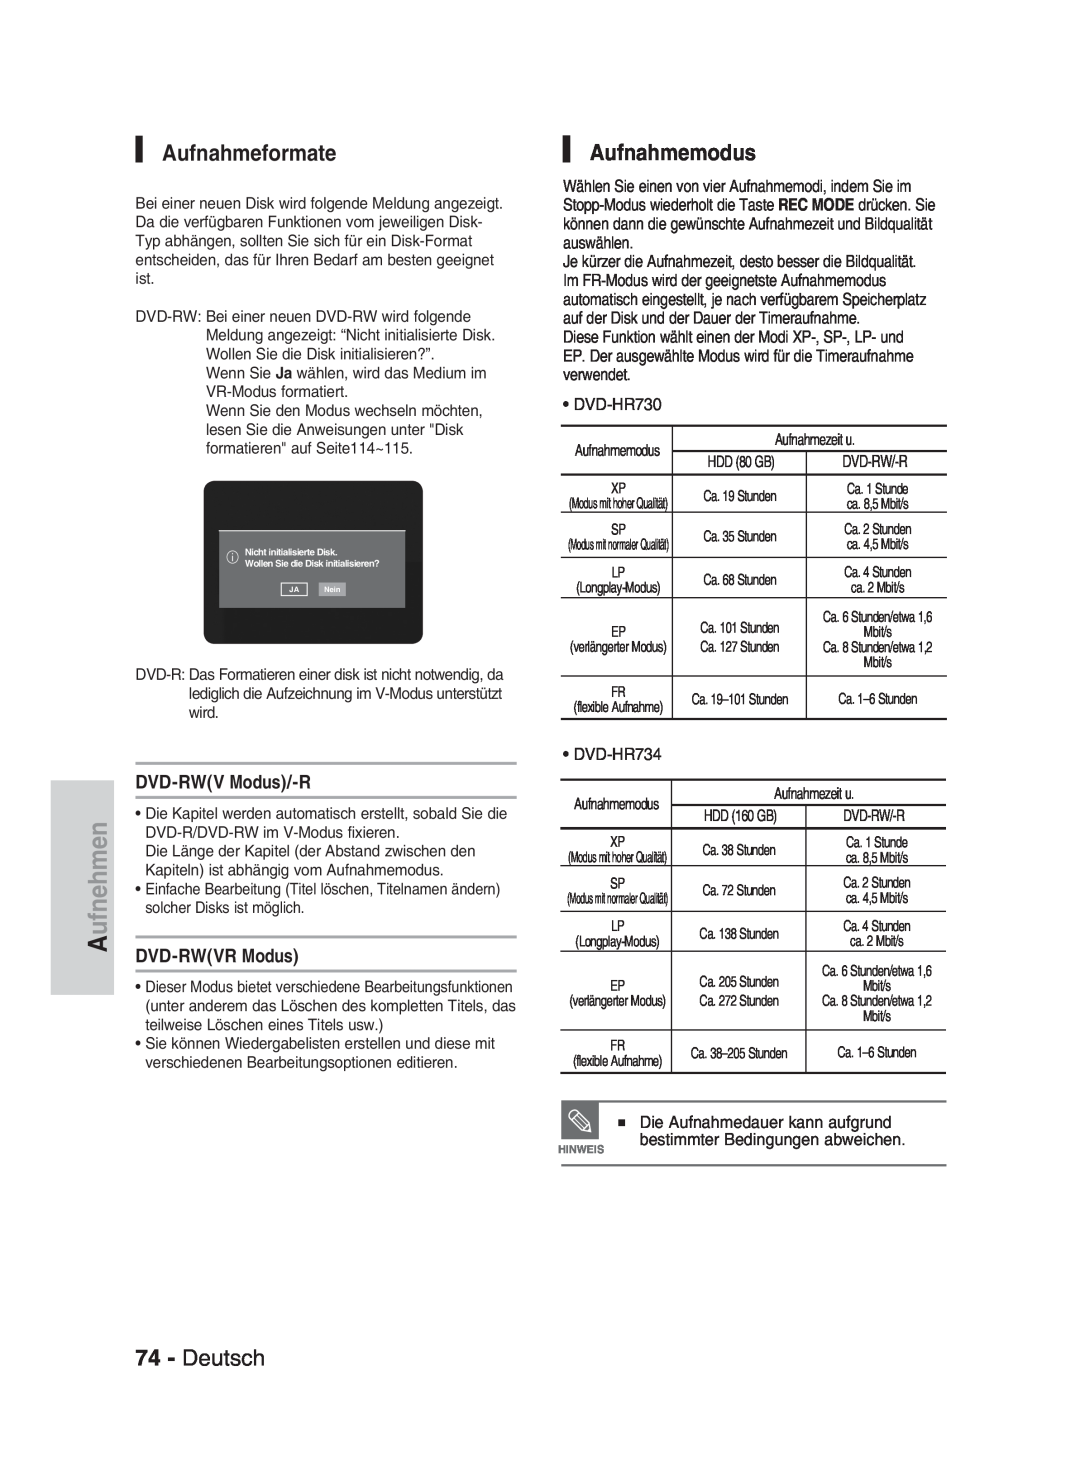 Samsung DVD-HR734/XEG, DVD-HR730/XEC, DVD-HR730/XEB, DVD-HR730/XEG manual Aufnehmen, Aufnahmeformate, Aufnahmemodus, Deutsch 